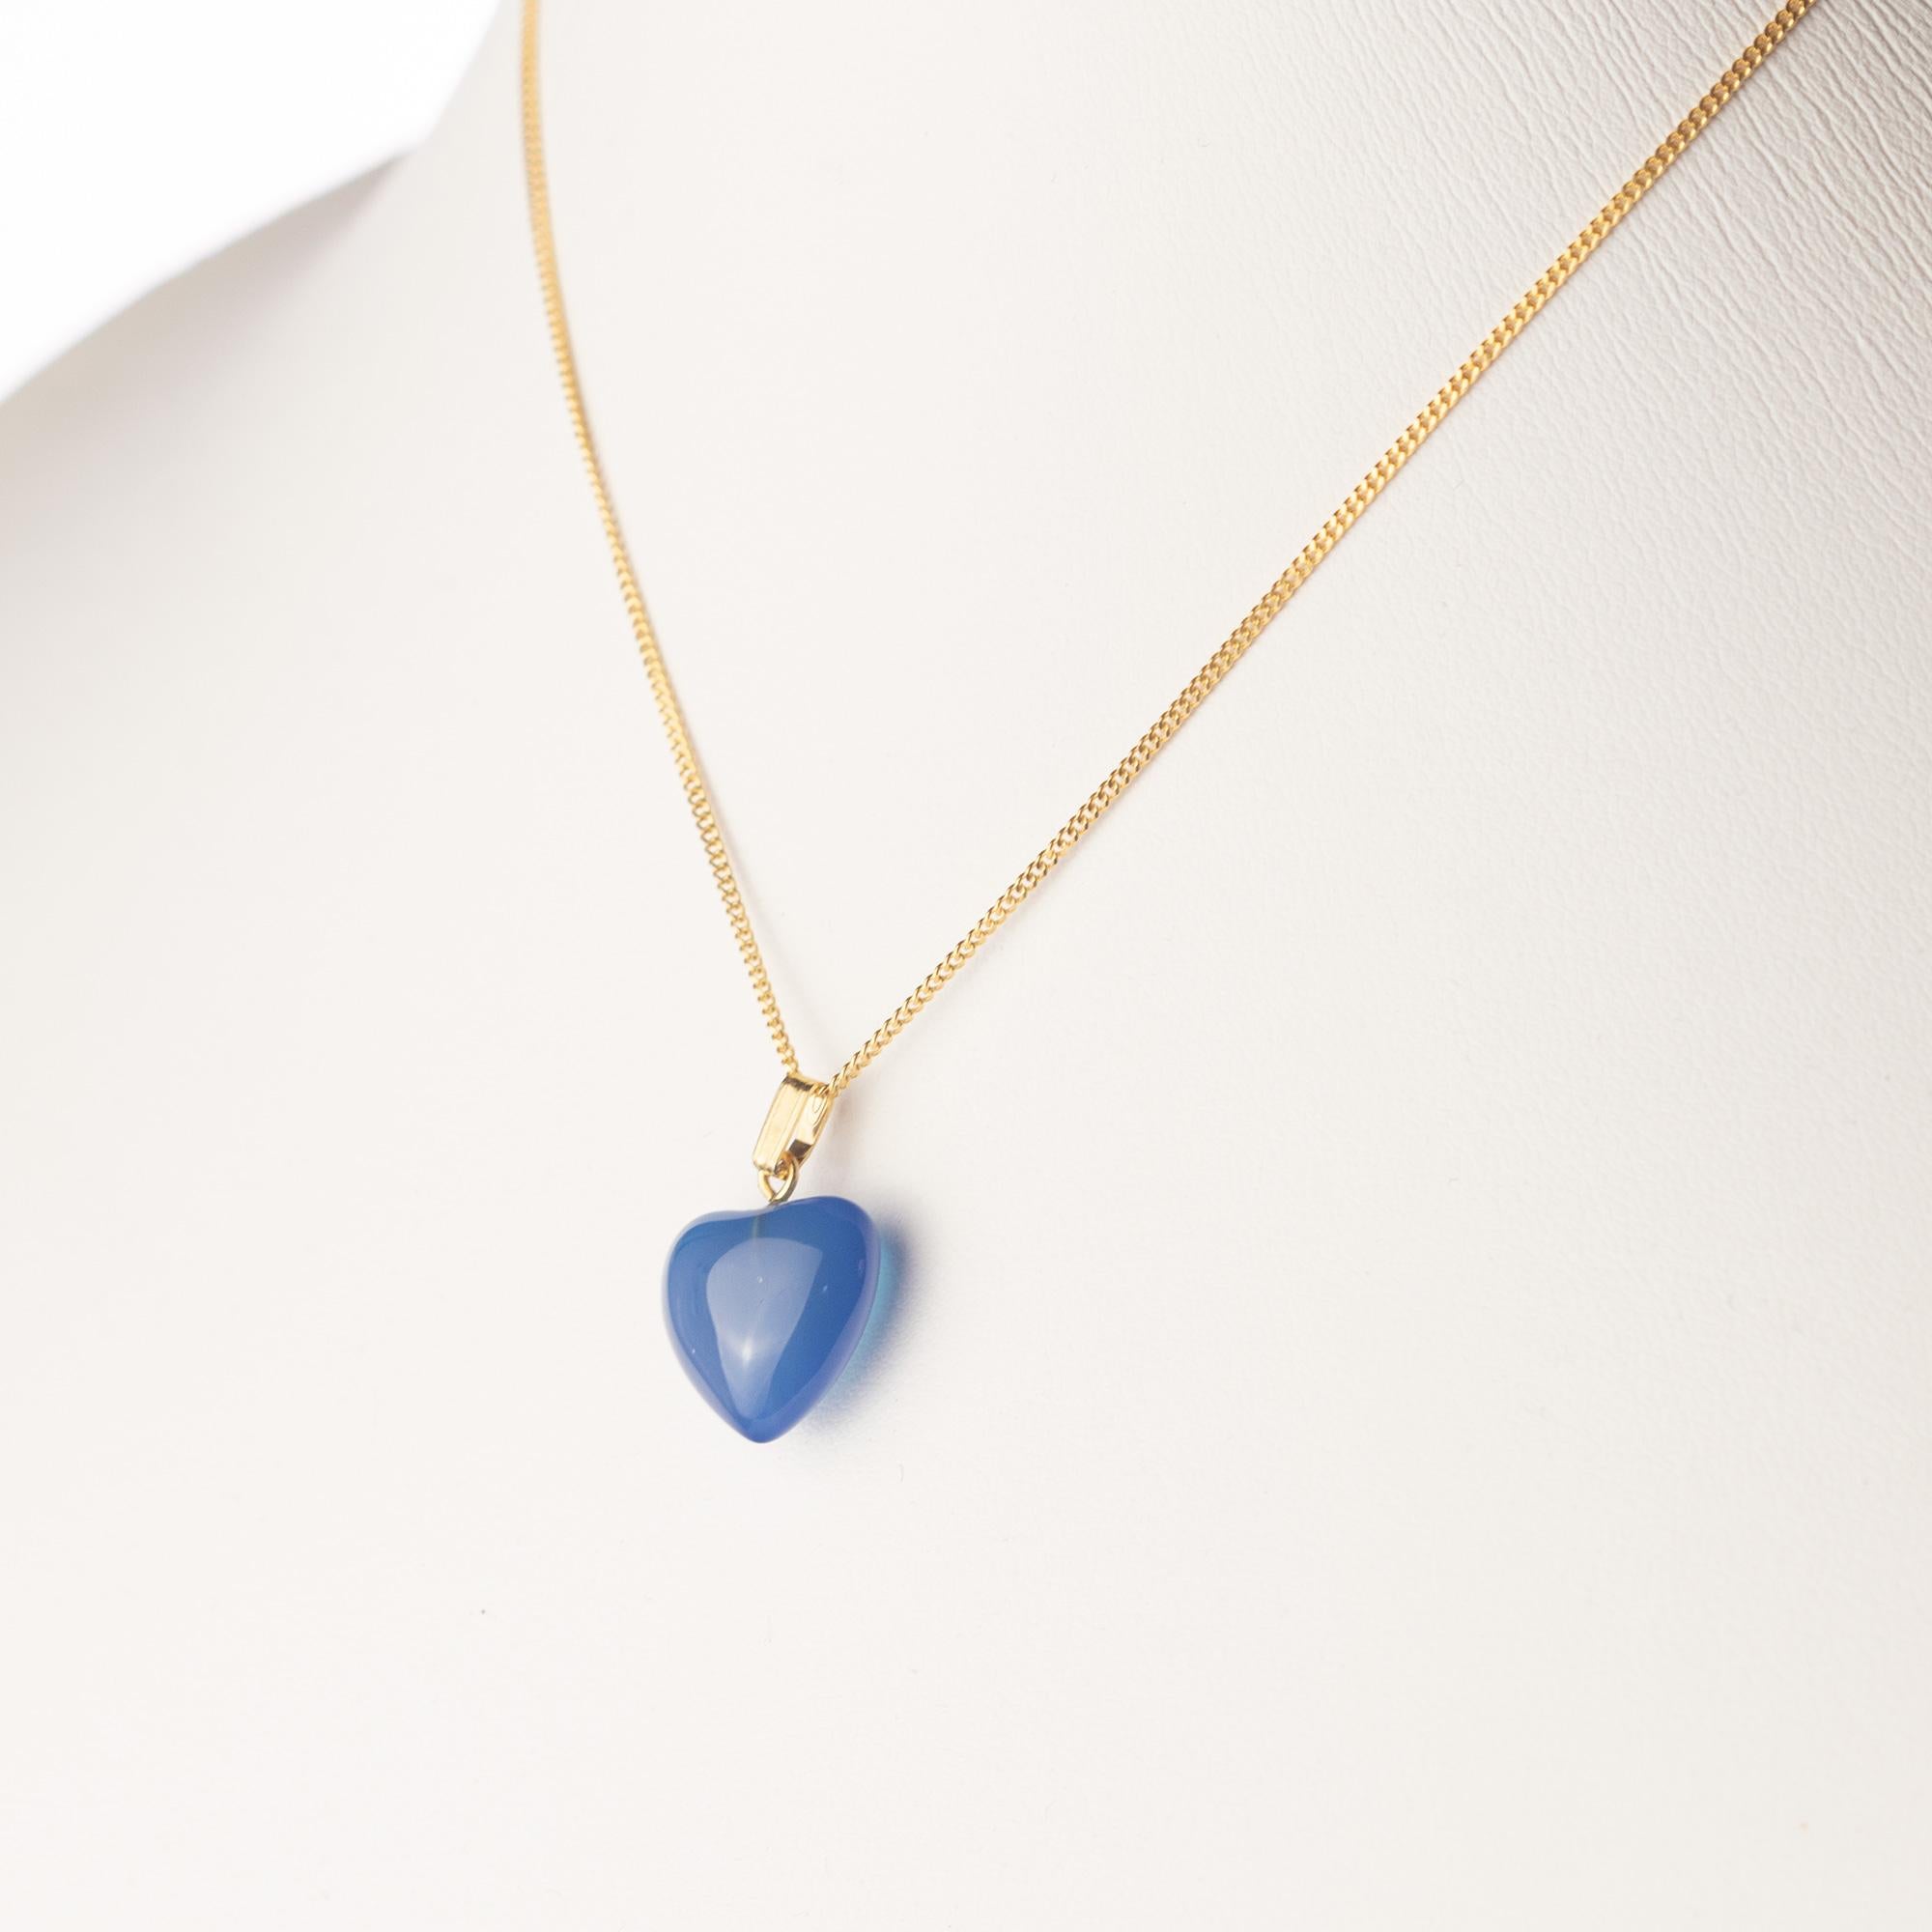 Romantic Intini Jewels Natural Quartz Heart Pendant Gold Plate Chain Love Necklace For Sale